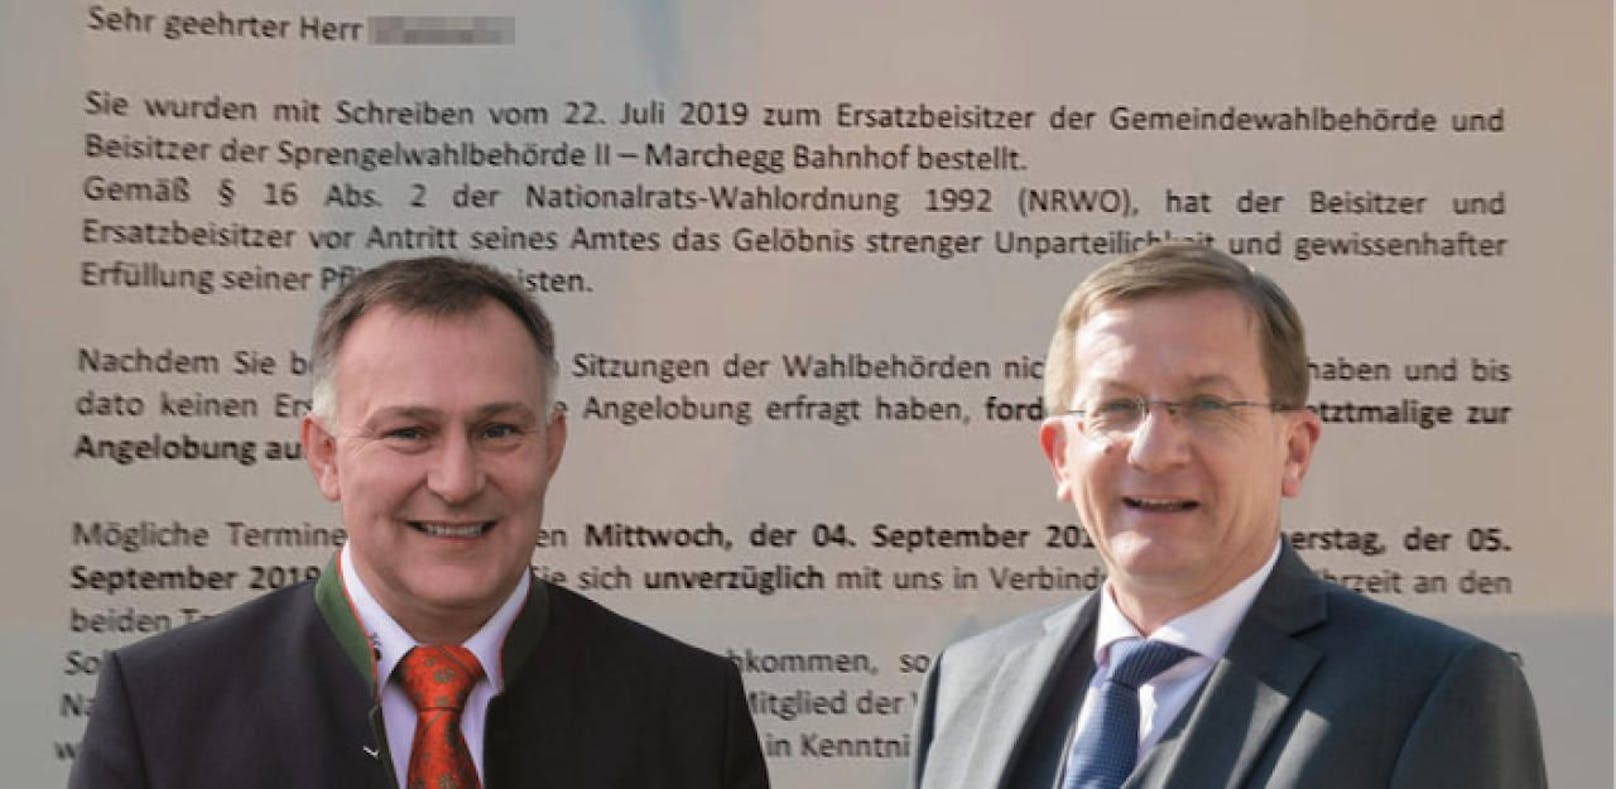 Wahlbeisitzer mit Rauswurf bedroht: FPÖ ortet Skandal